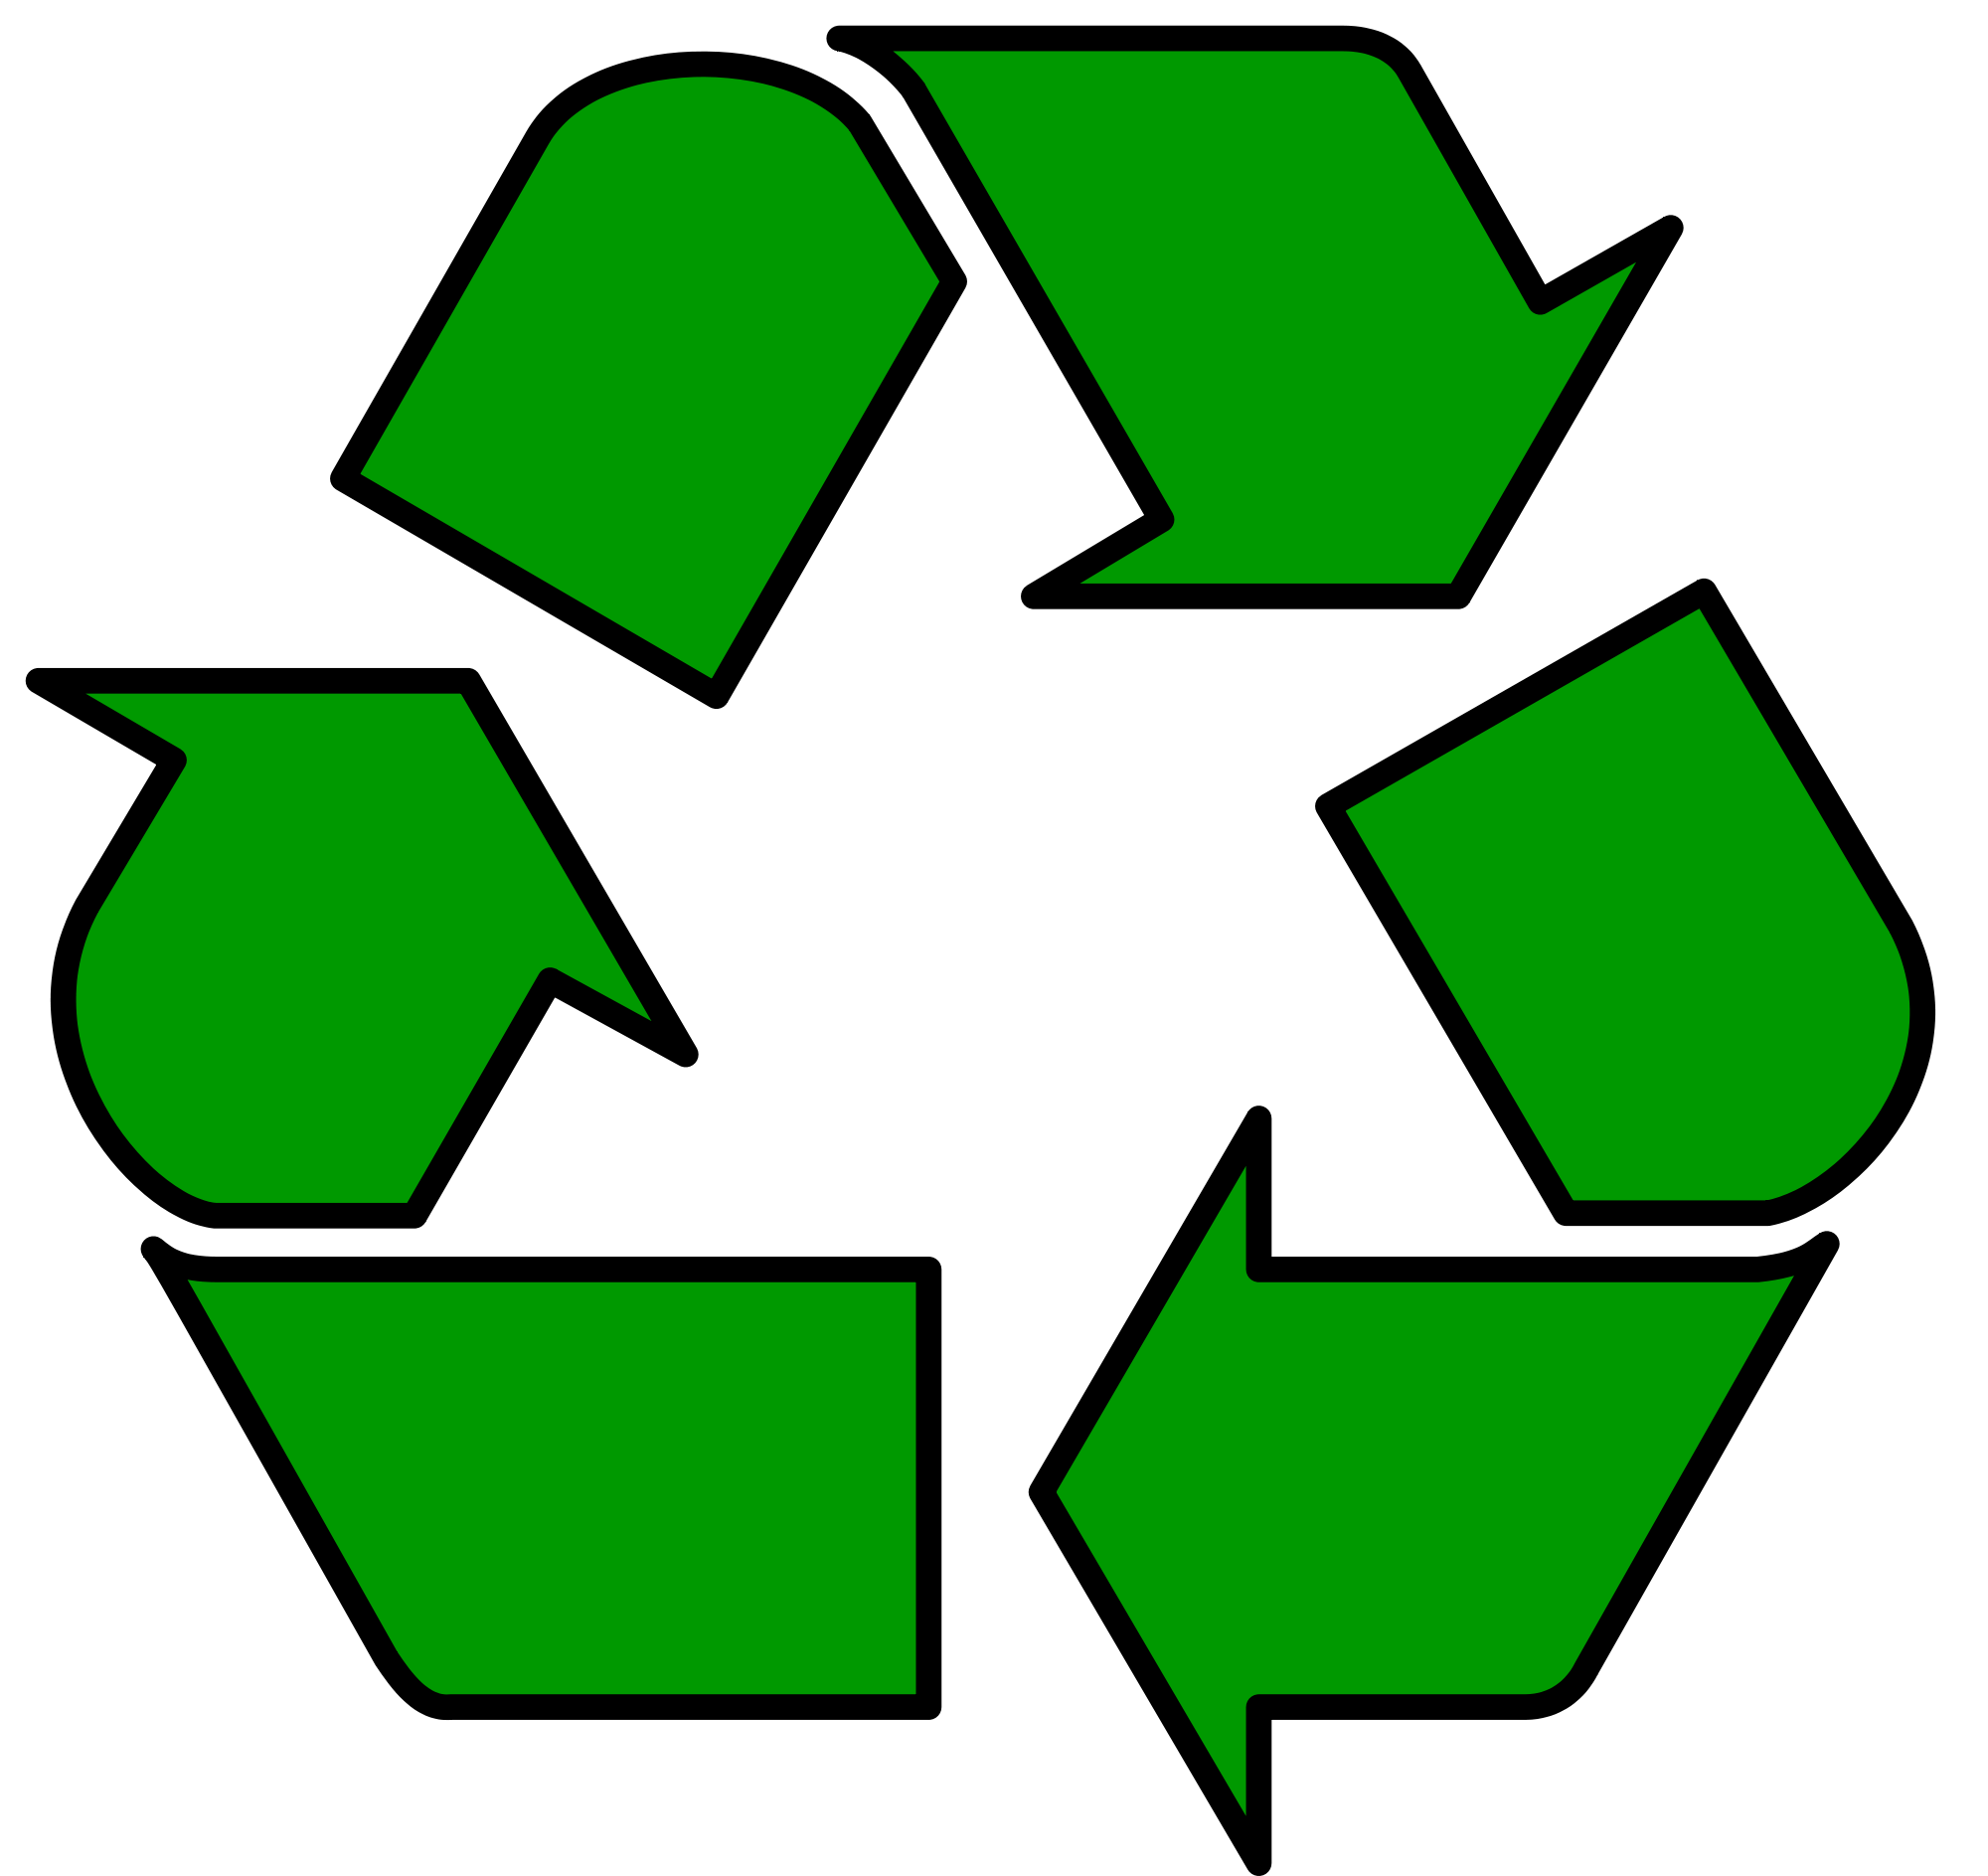 Recycling symbol - Wikipedia, the free encyclopedia